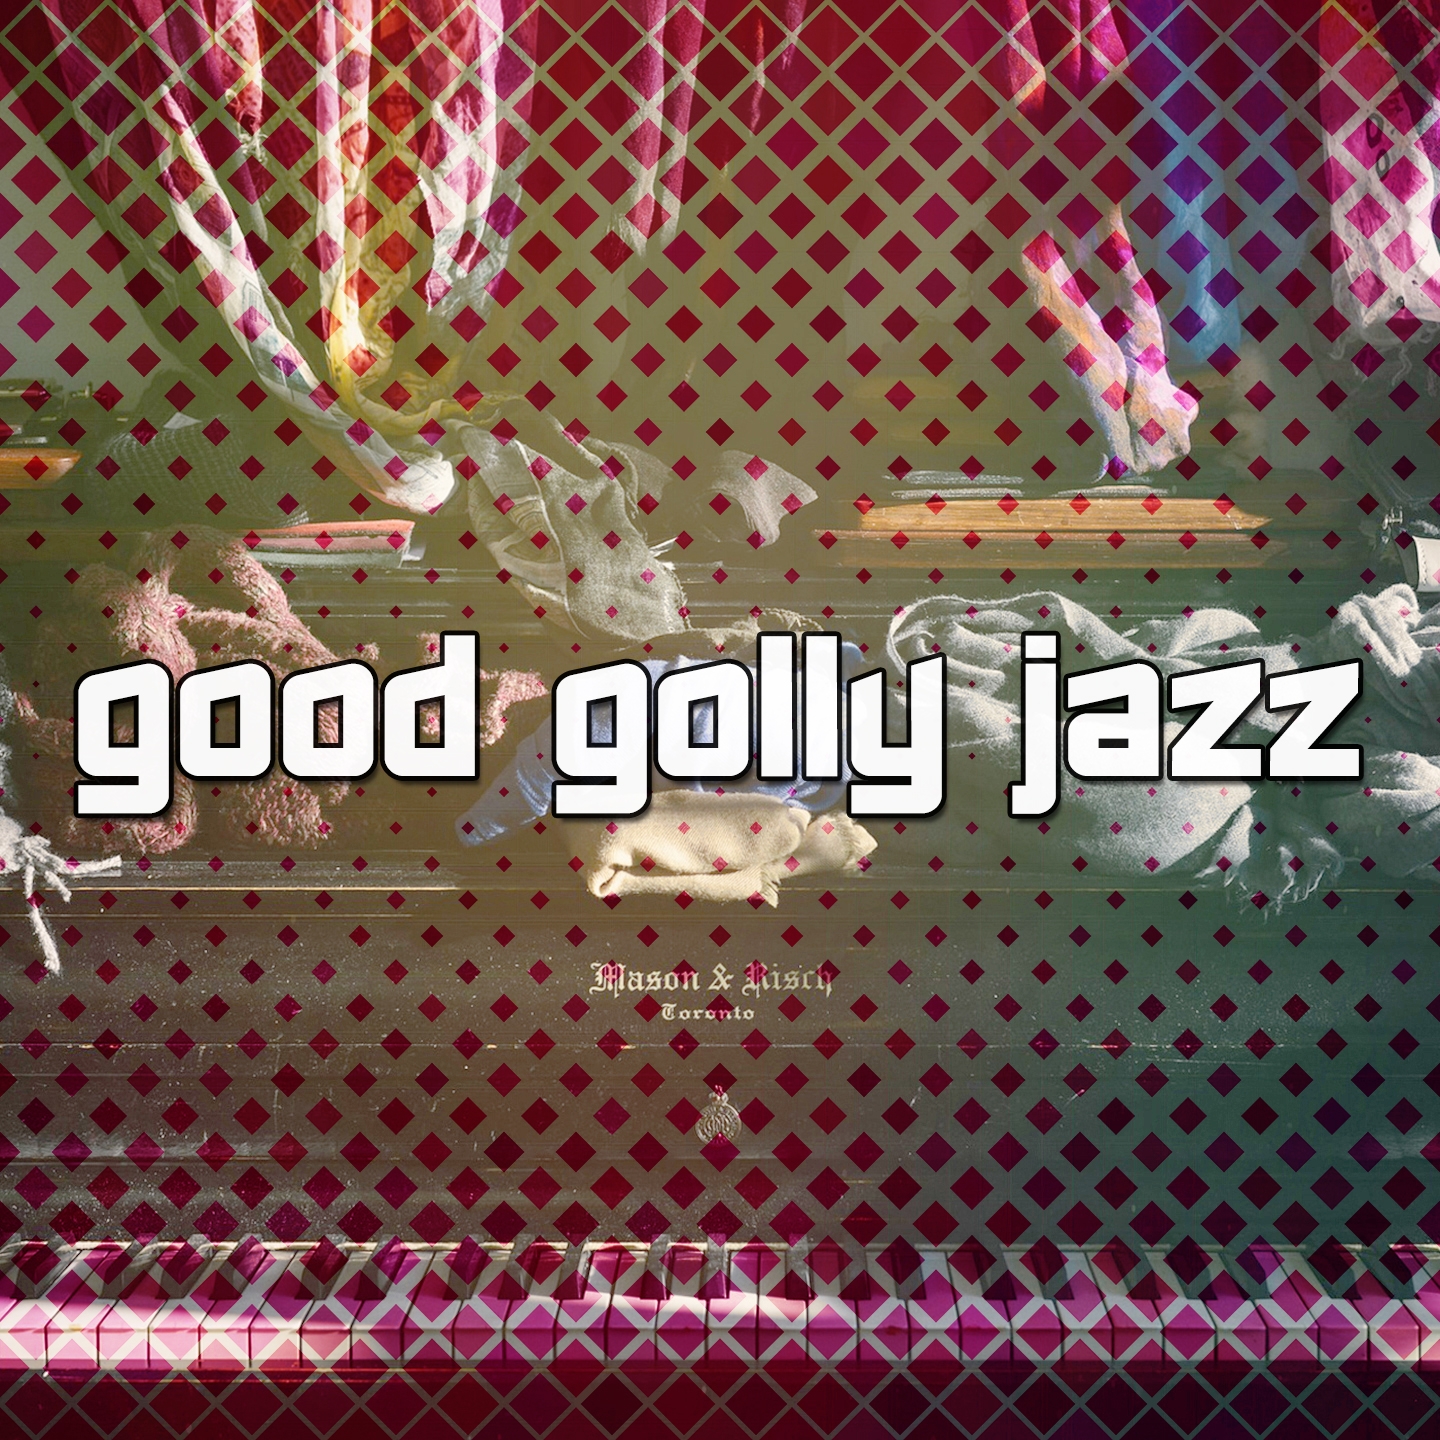 Good Golly Jazz